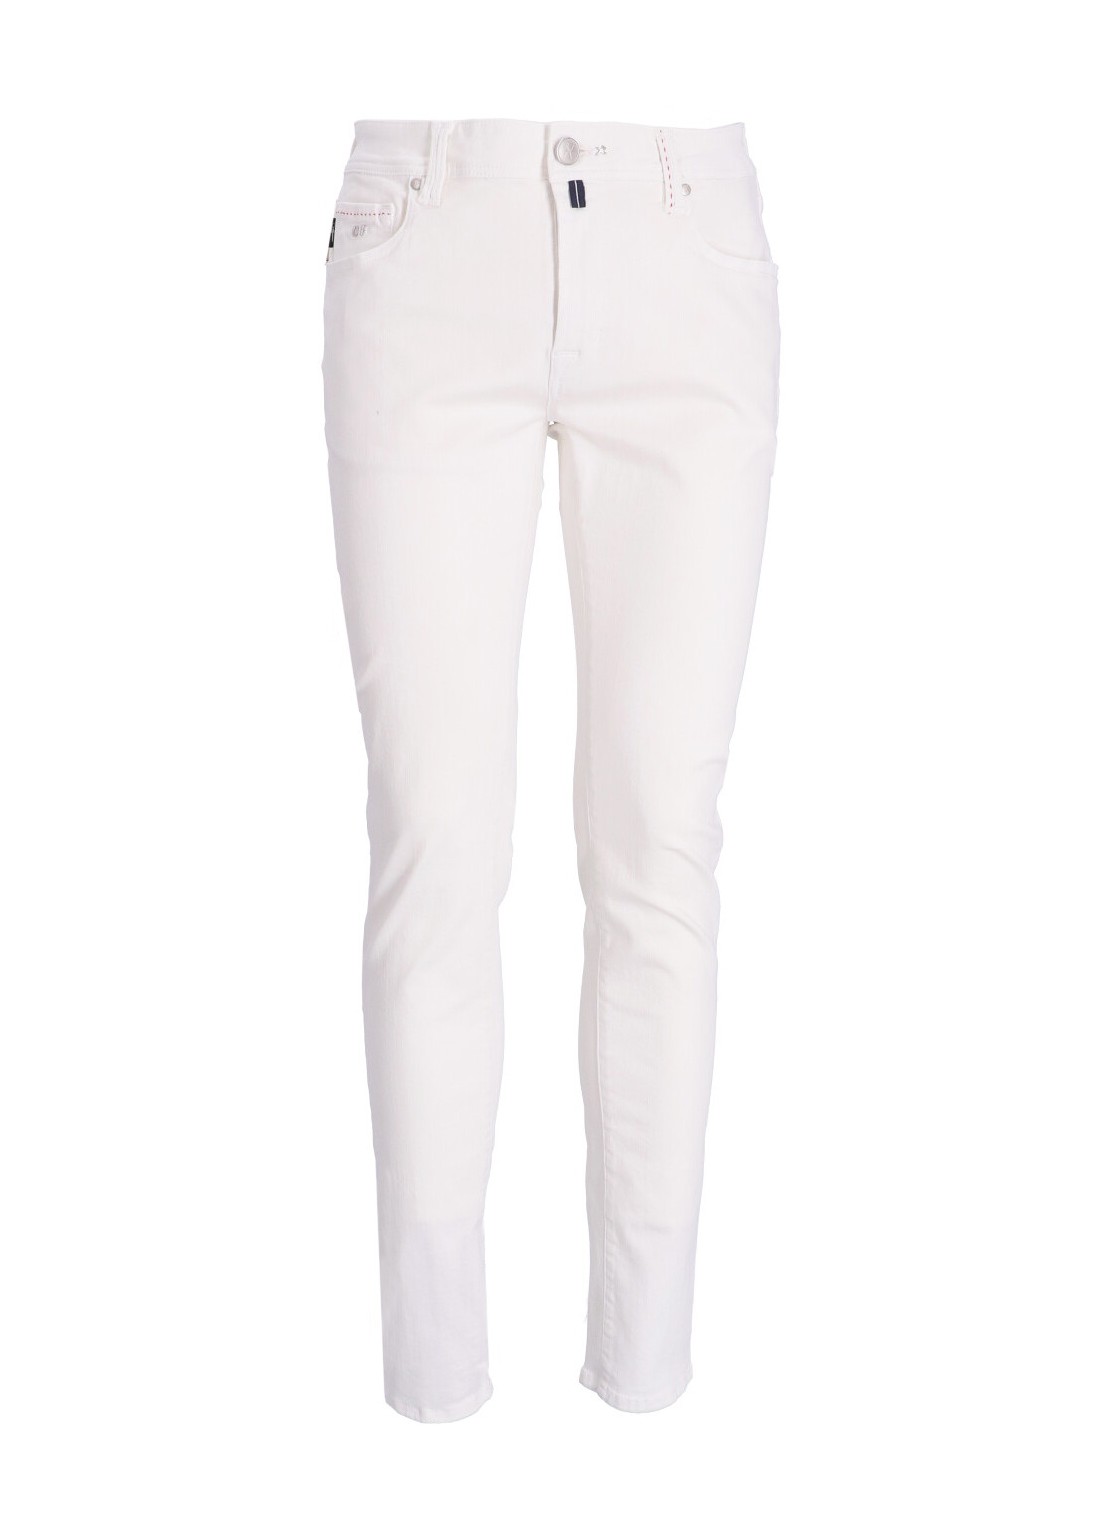 Pantalon jeans tramarossa denim man leonardo zip stre leonardo zip stre old 0001 white talla blanco
